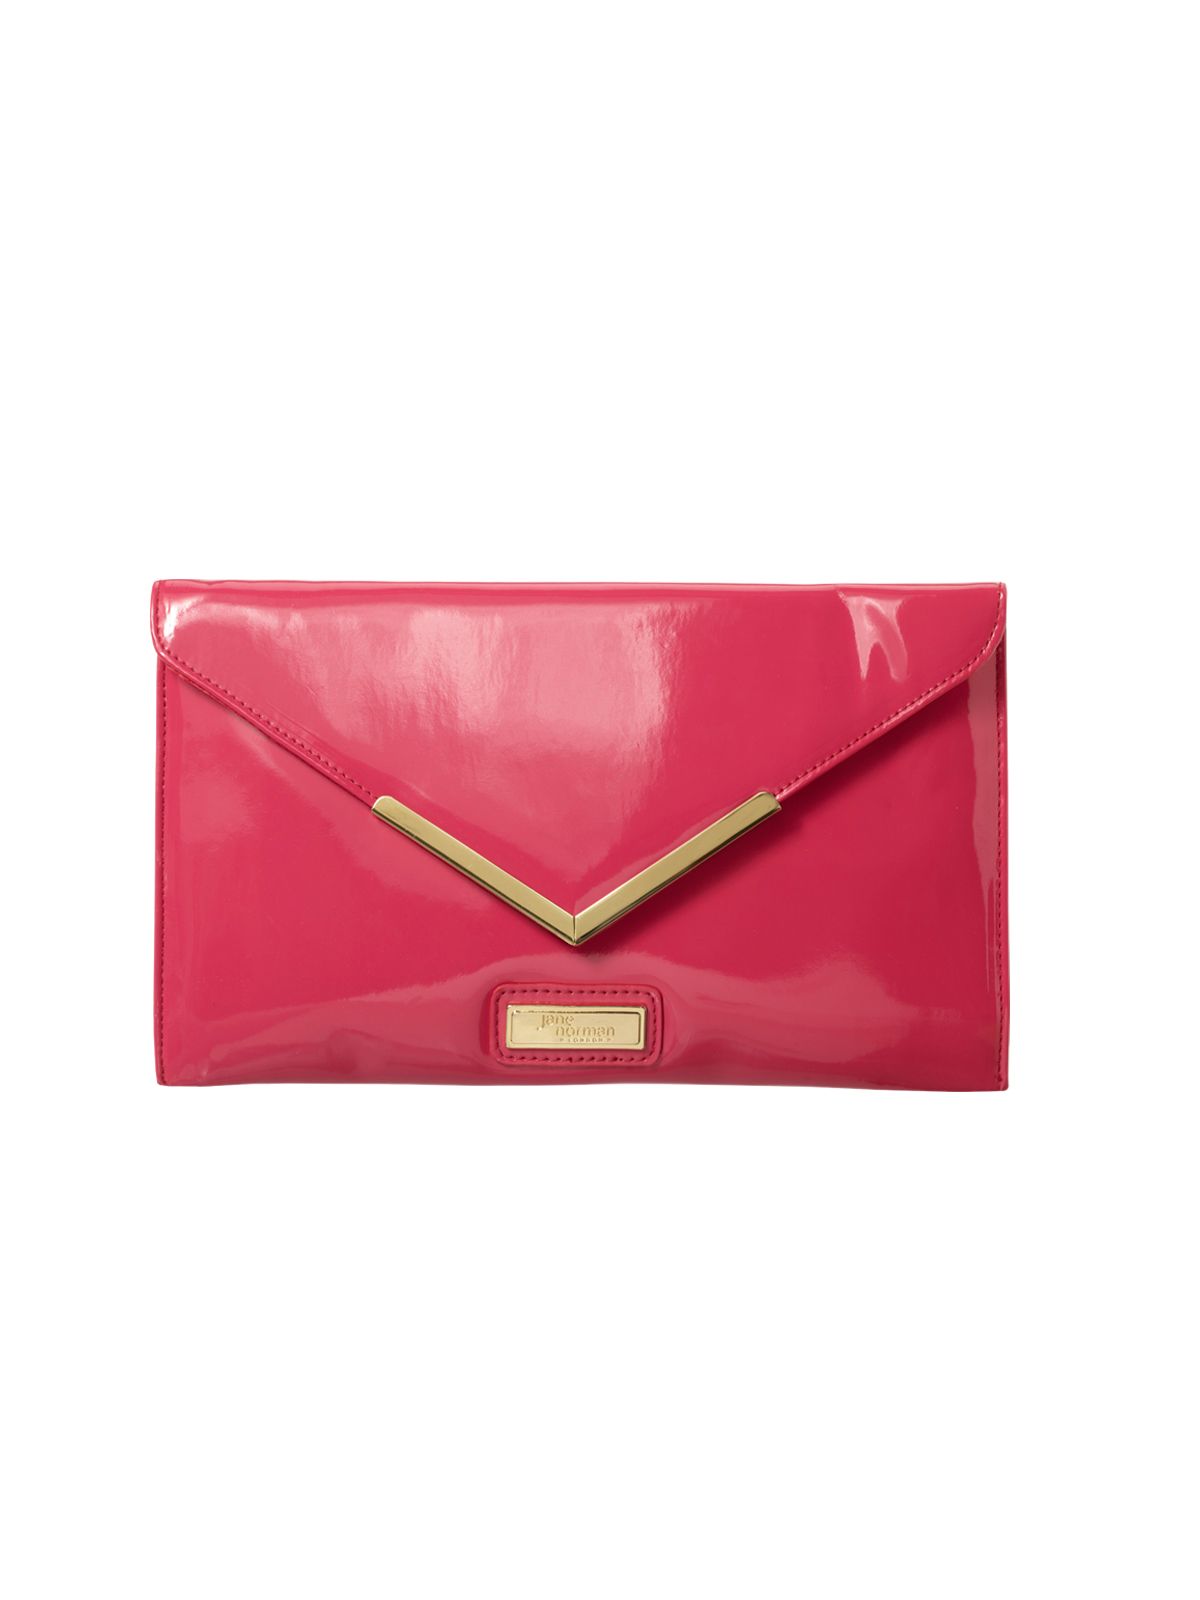 Jane norman Fuchsia Clutch Bag in Pink | Lyst